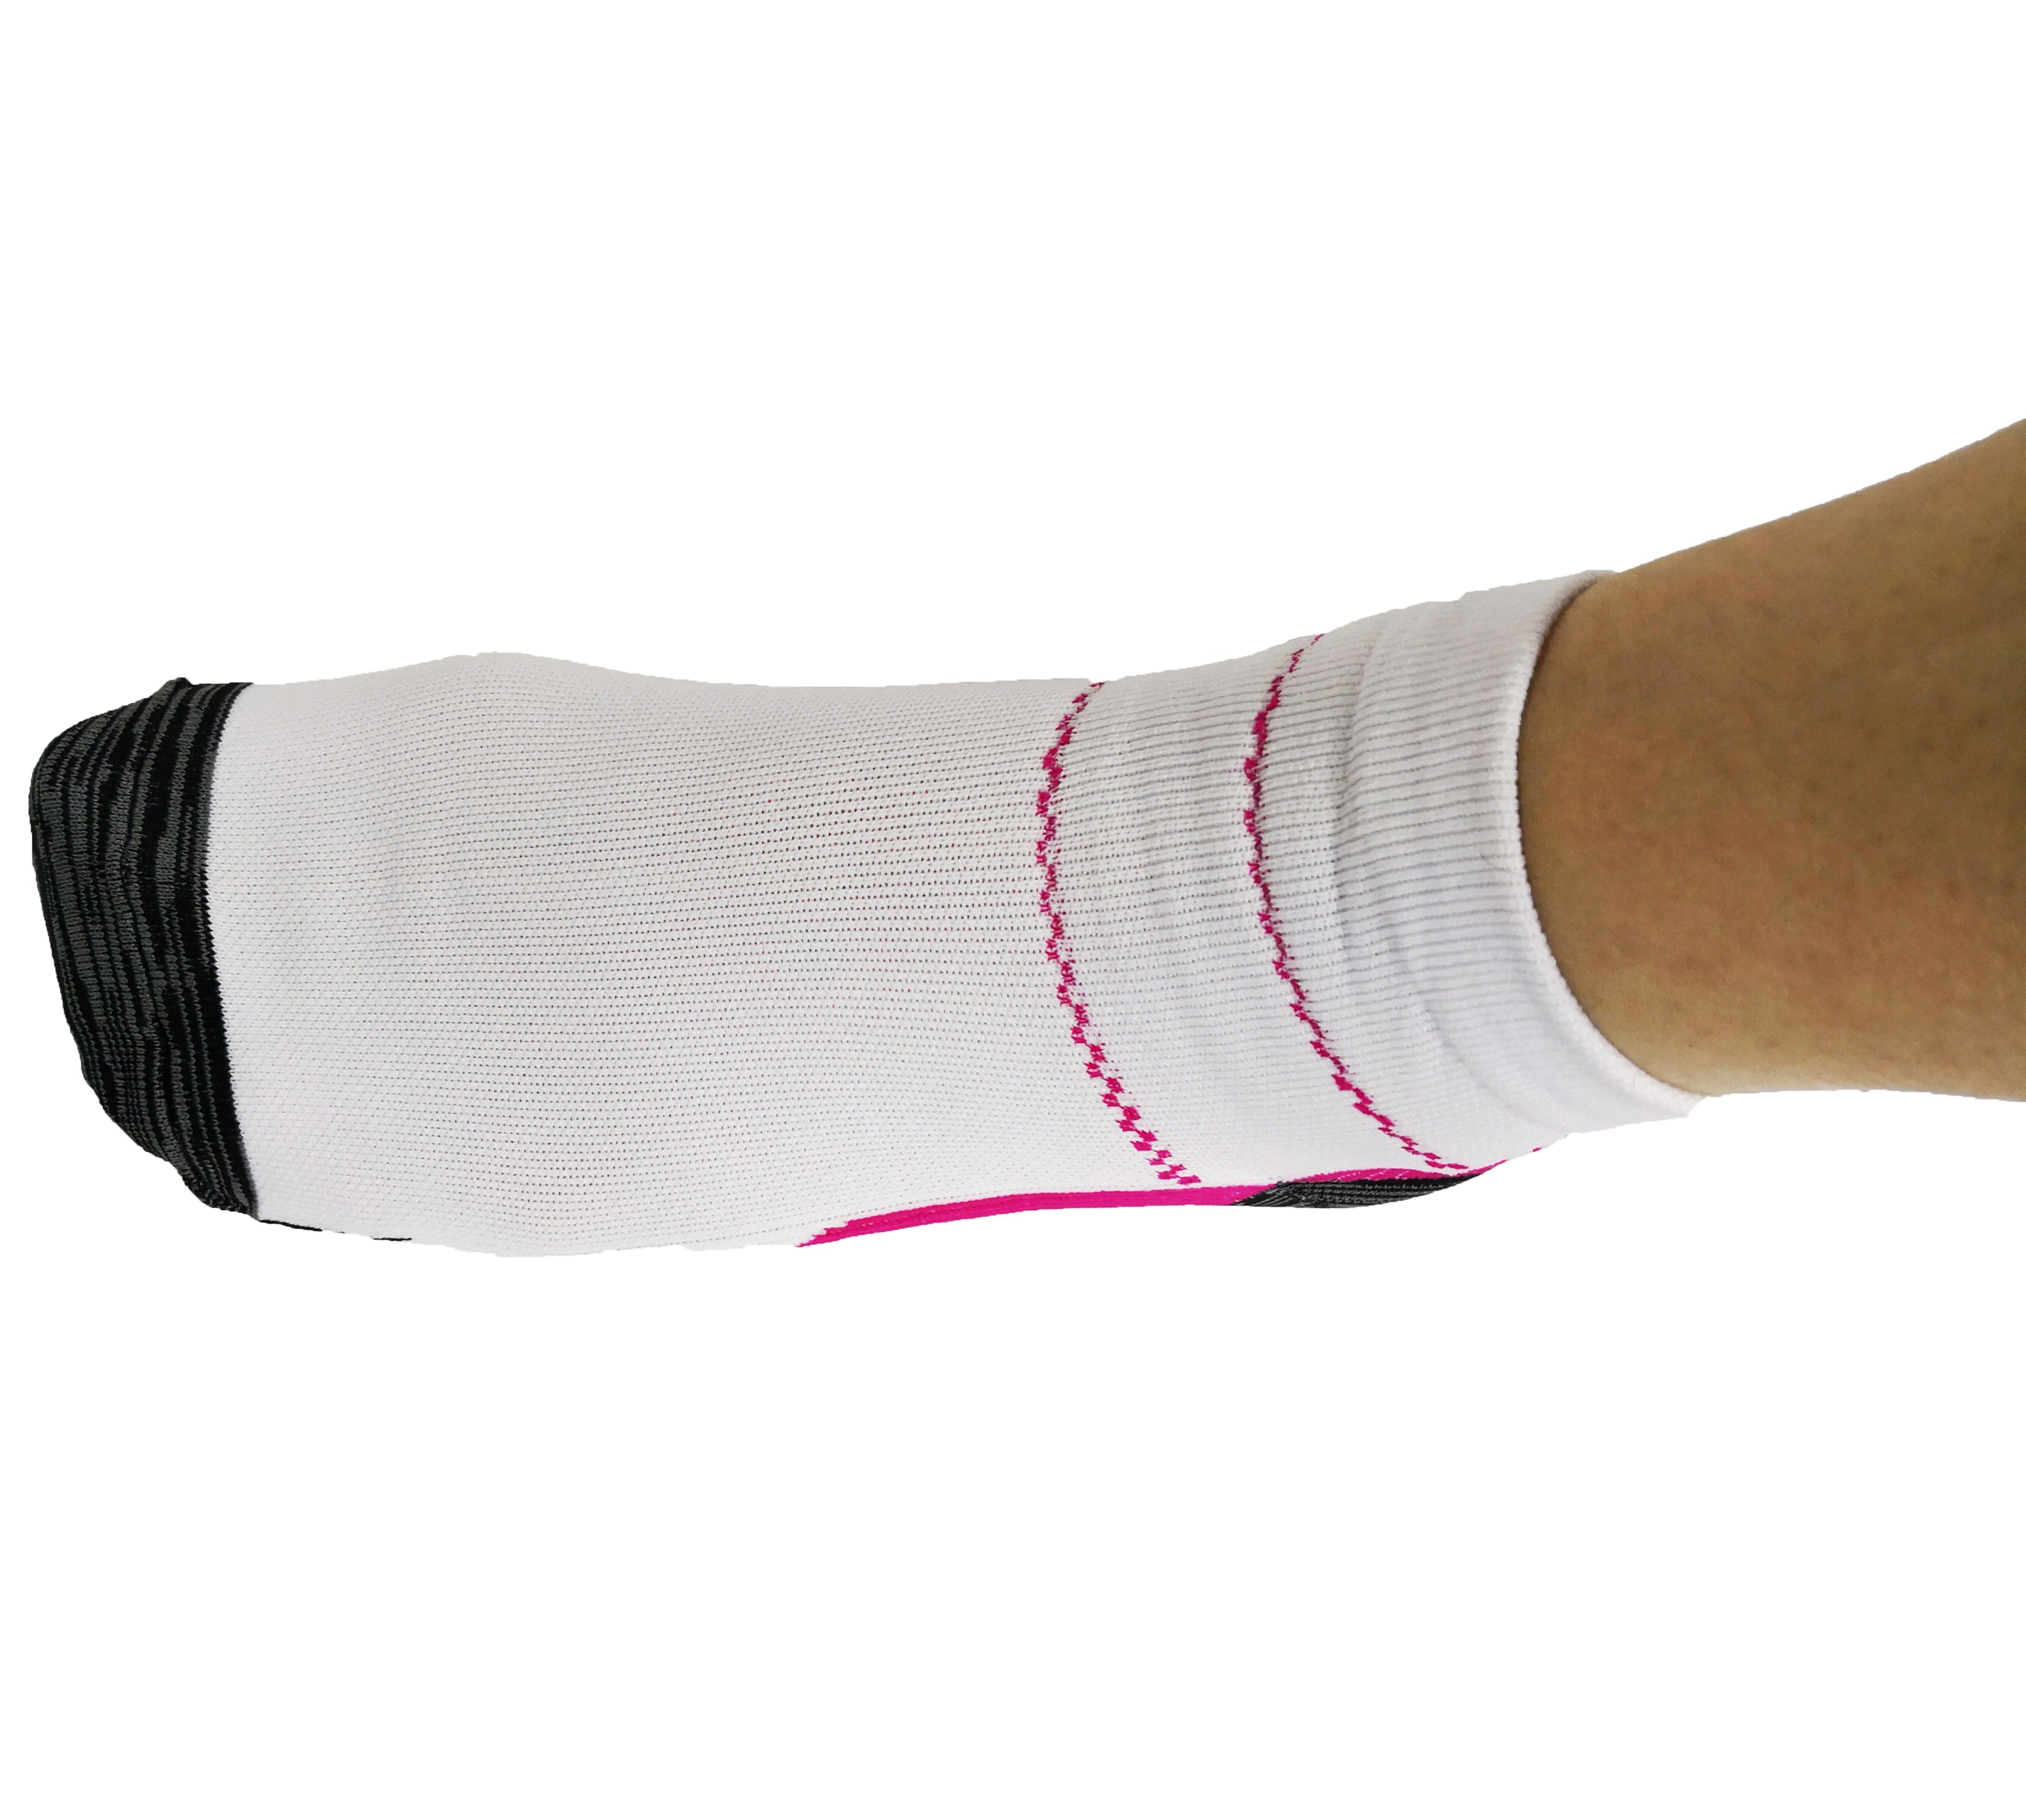 Running Socks Pink/White